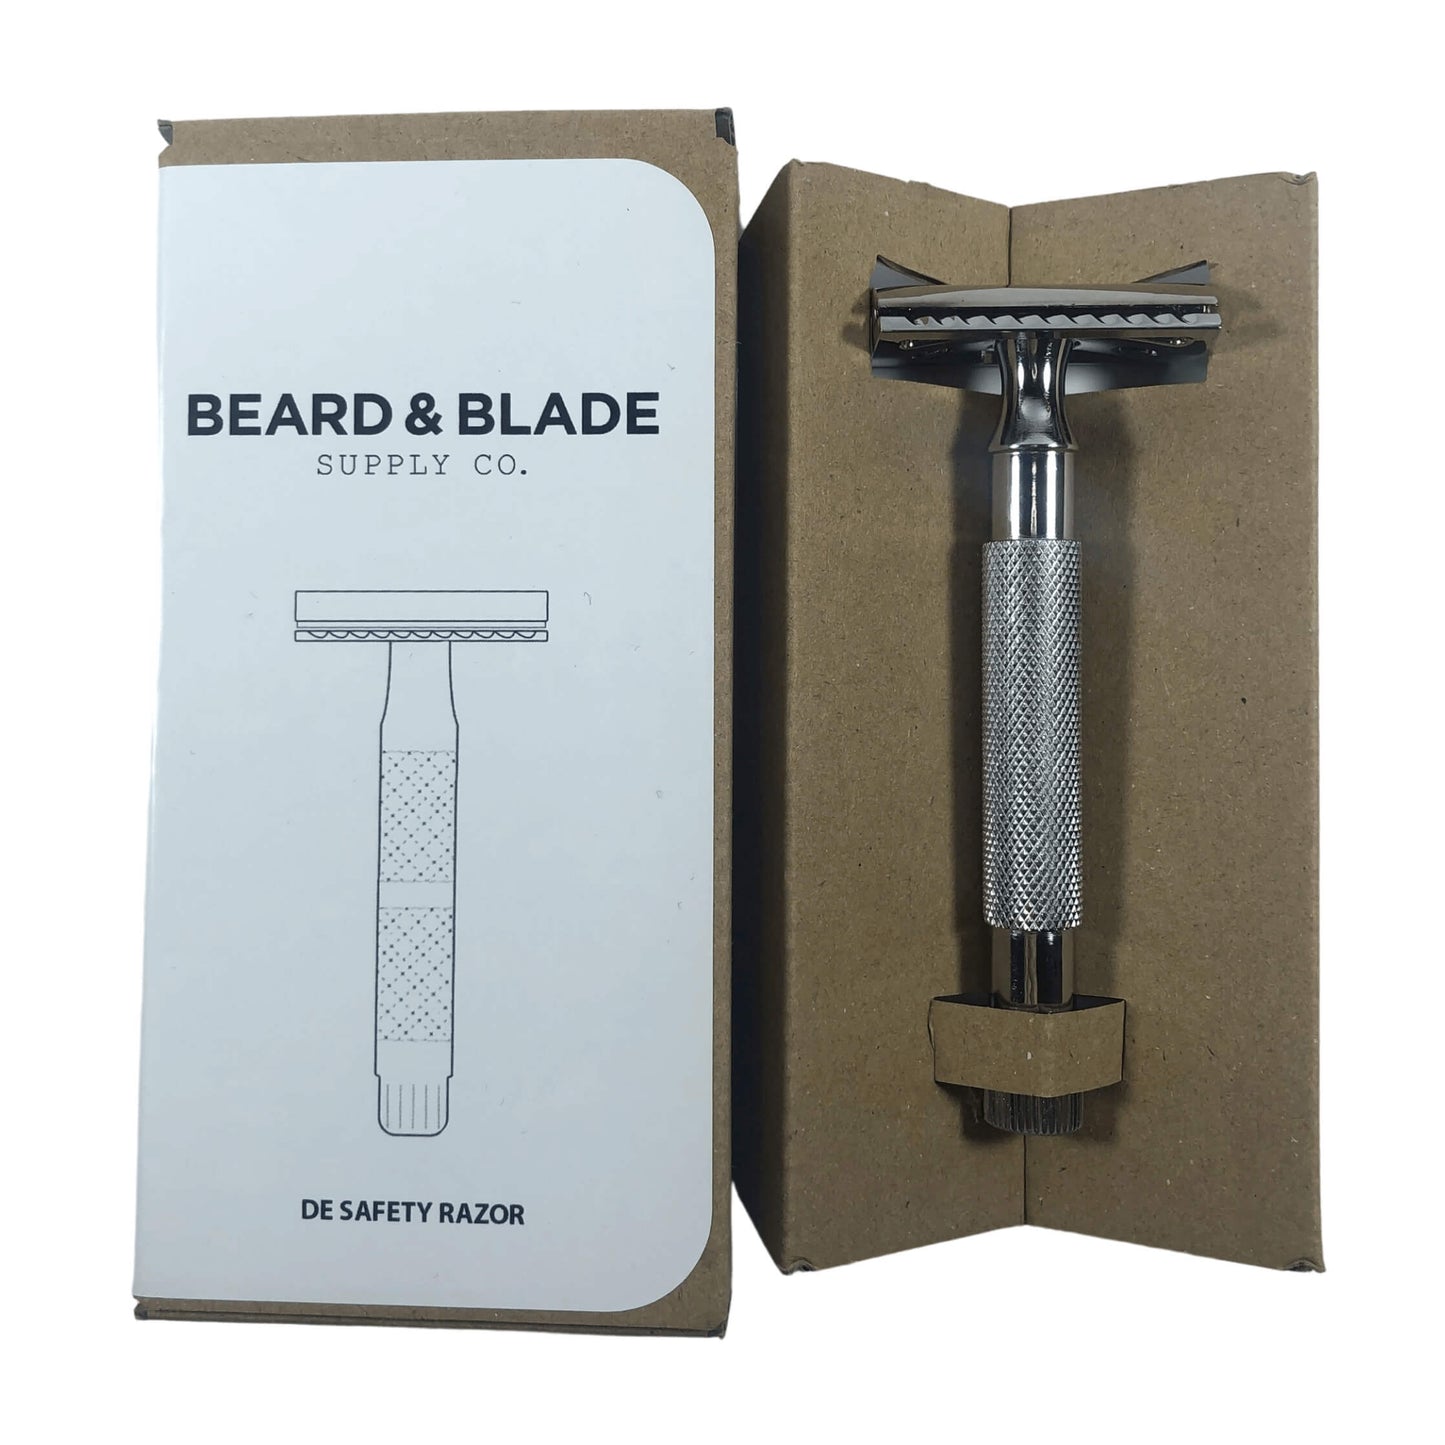 Beard & Blade chrome long handled safety razor in box